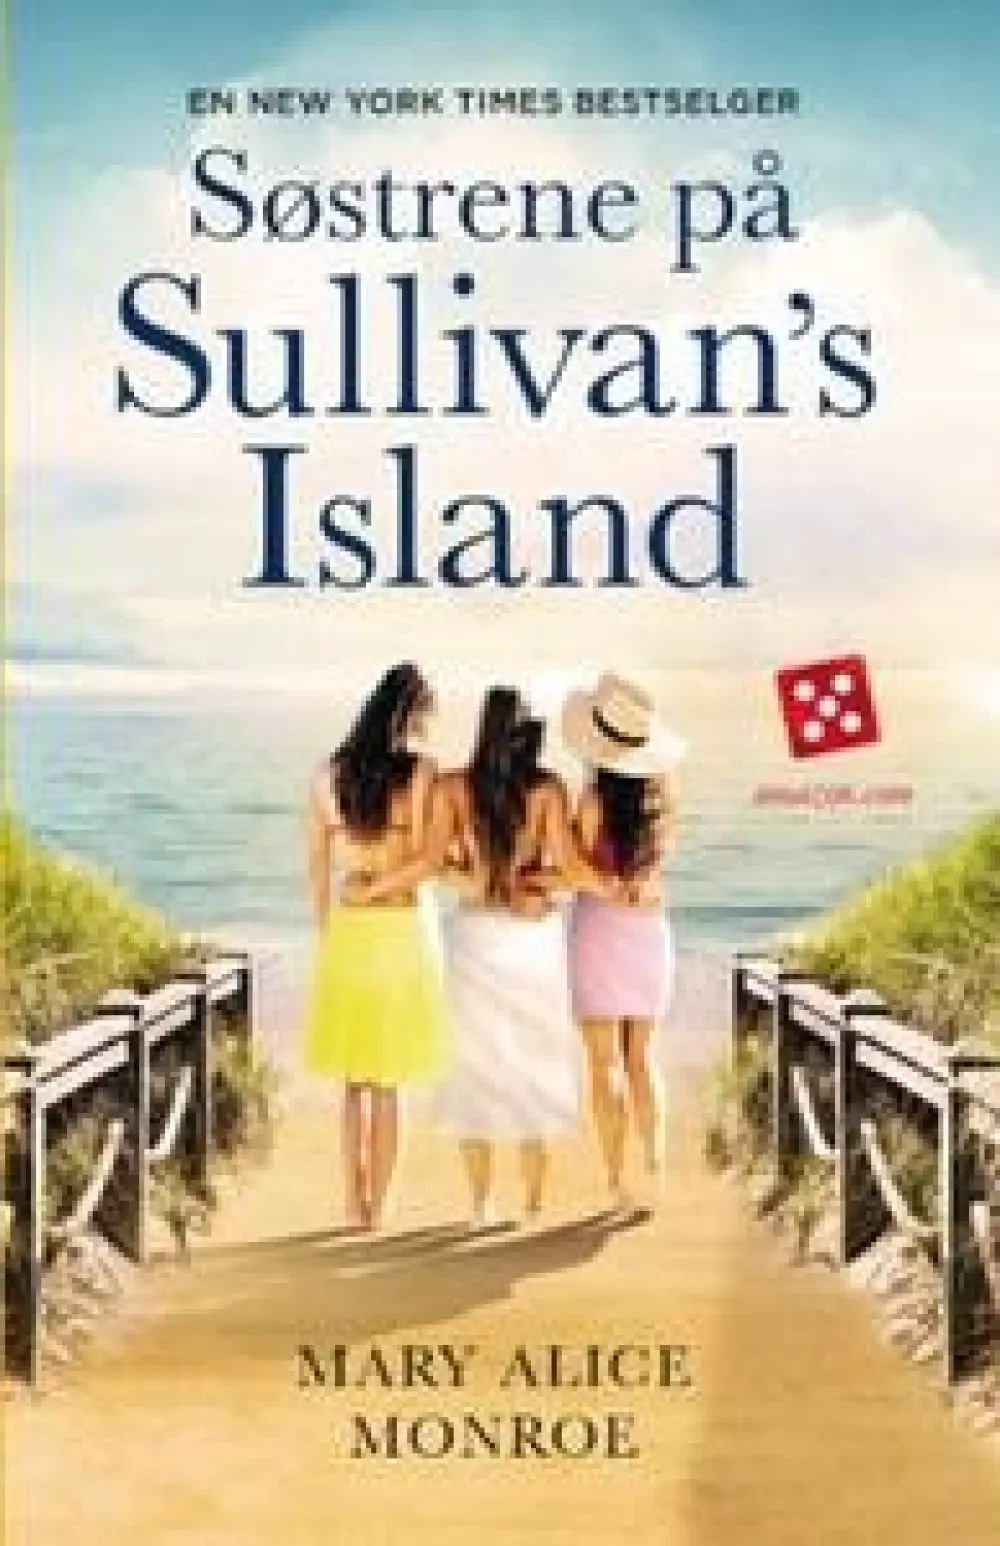 Sullivans Island 1: Søstrene på Sullivans Island (Pocket), 9788283131253, Pocket, Mary Alice Monroe - Pocket norsk